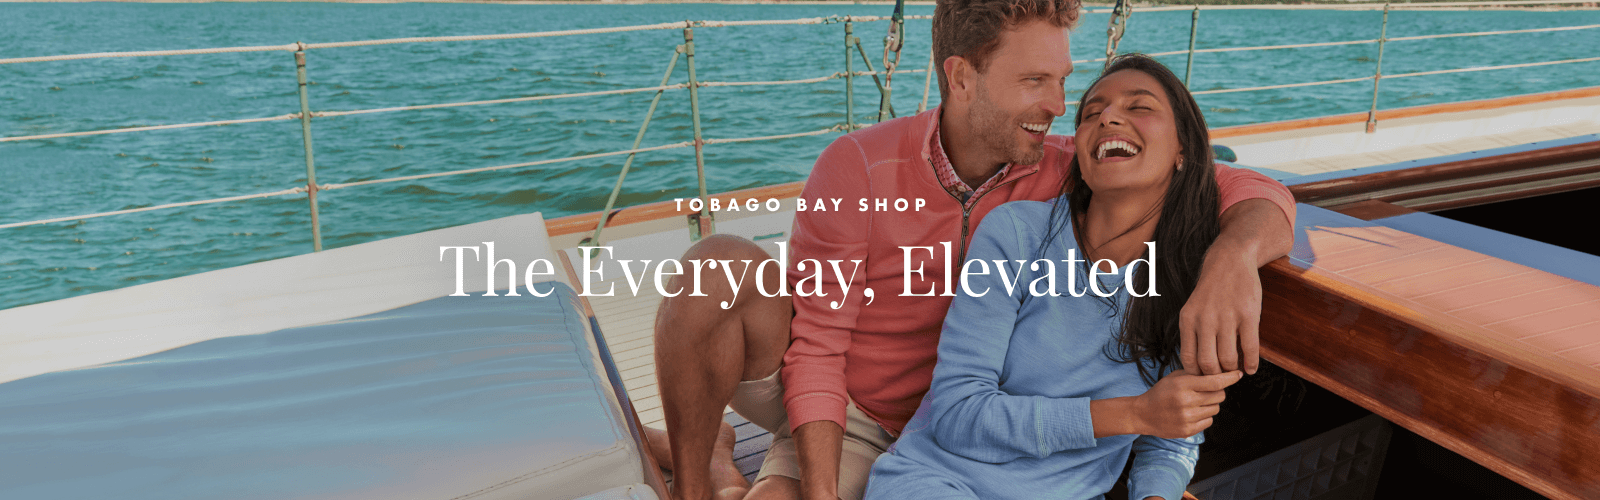 Tobago Bay Shop: The Everyday, Elevated